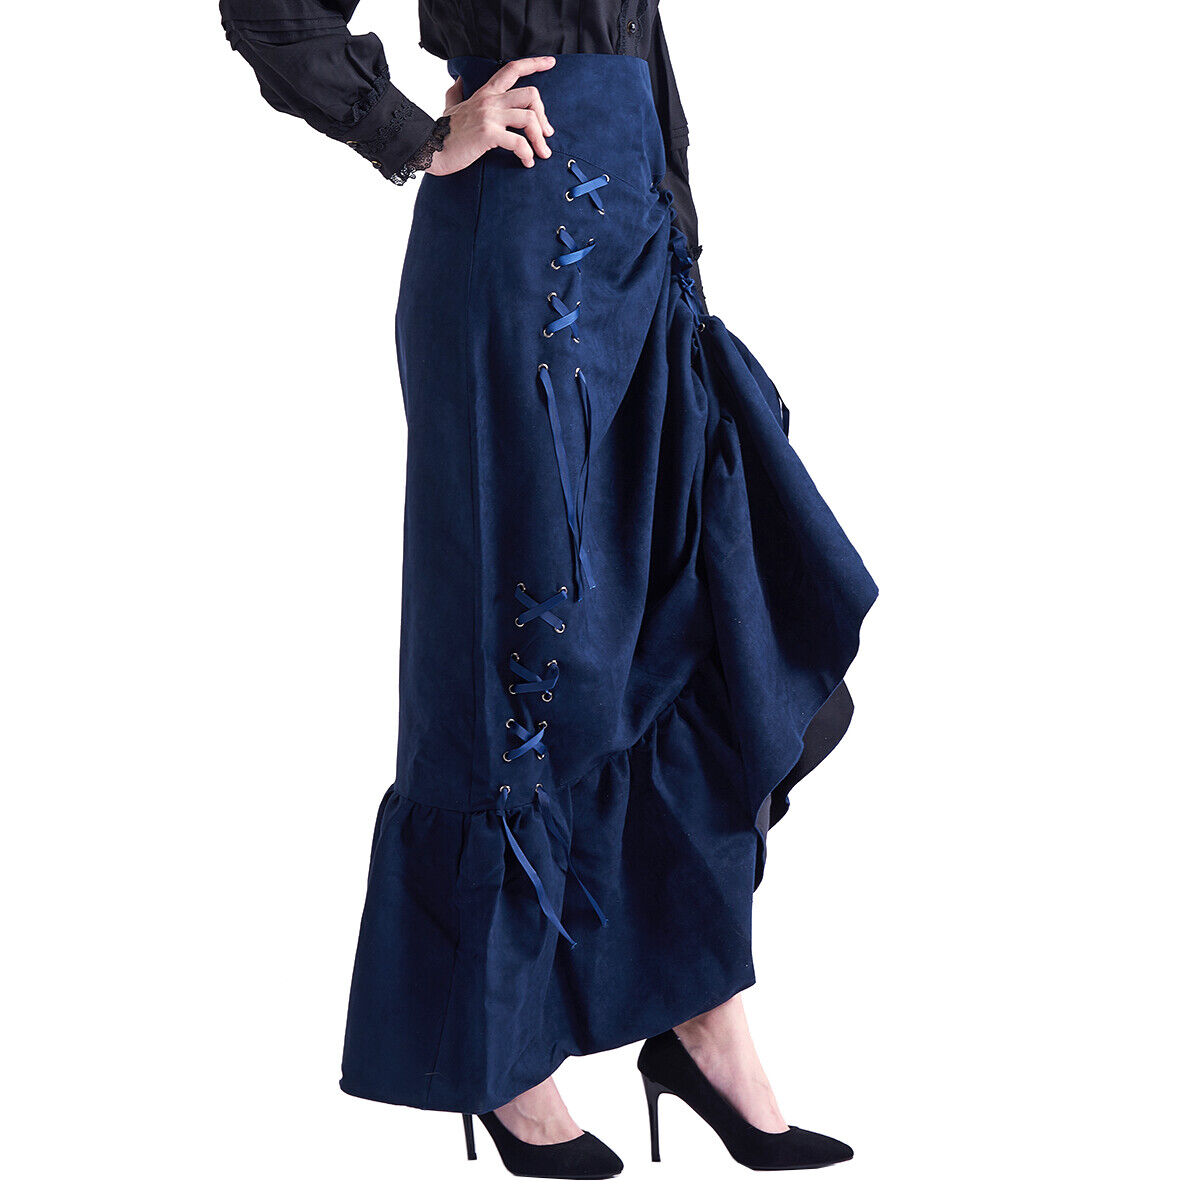 Women Long Fishtail Skirt Long Gothic Victorian Skirt Steampunk SKirt  Lace-Up | eBay